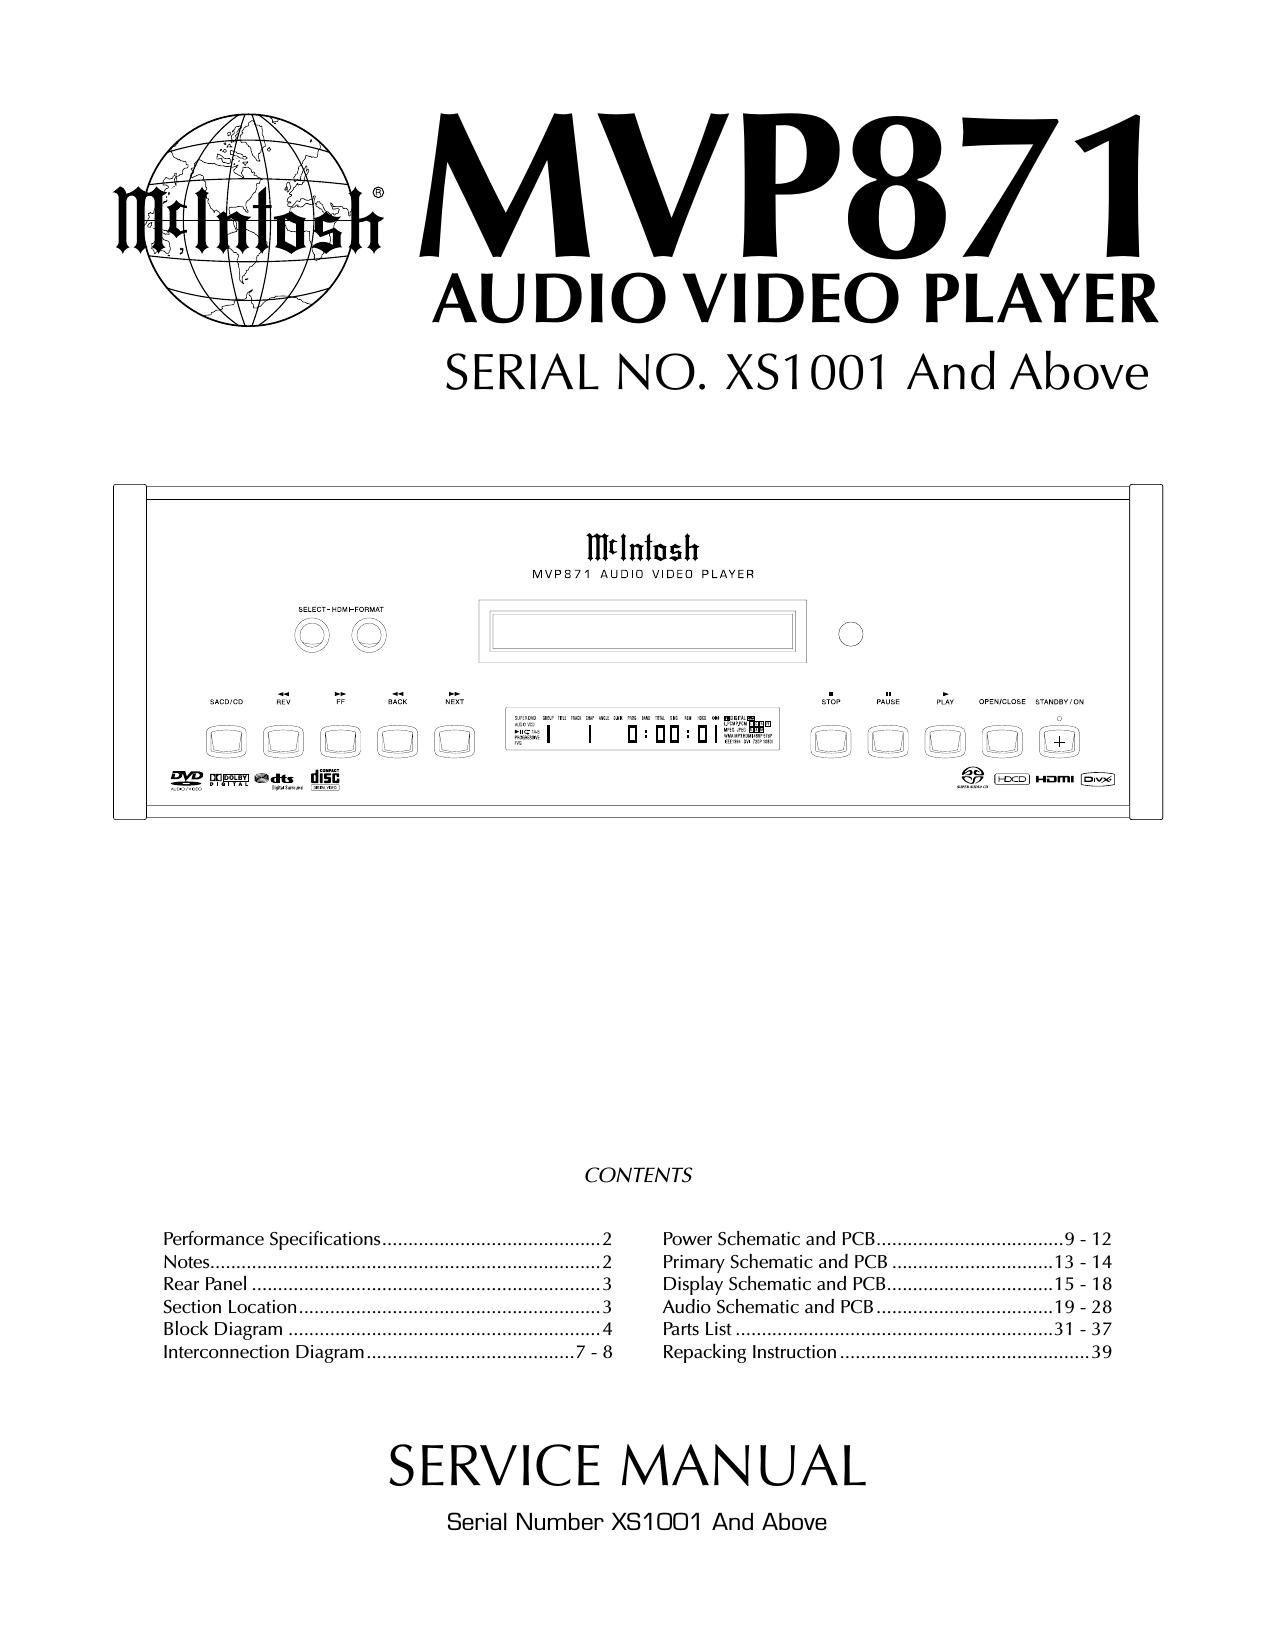 McIntosh MVP 871 Service Manual